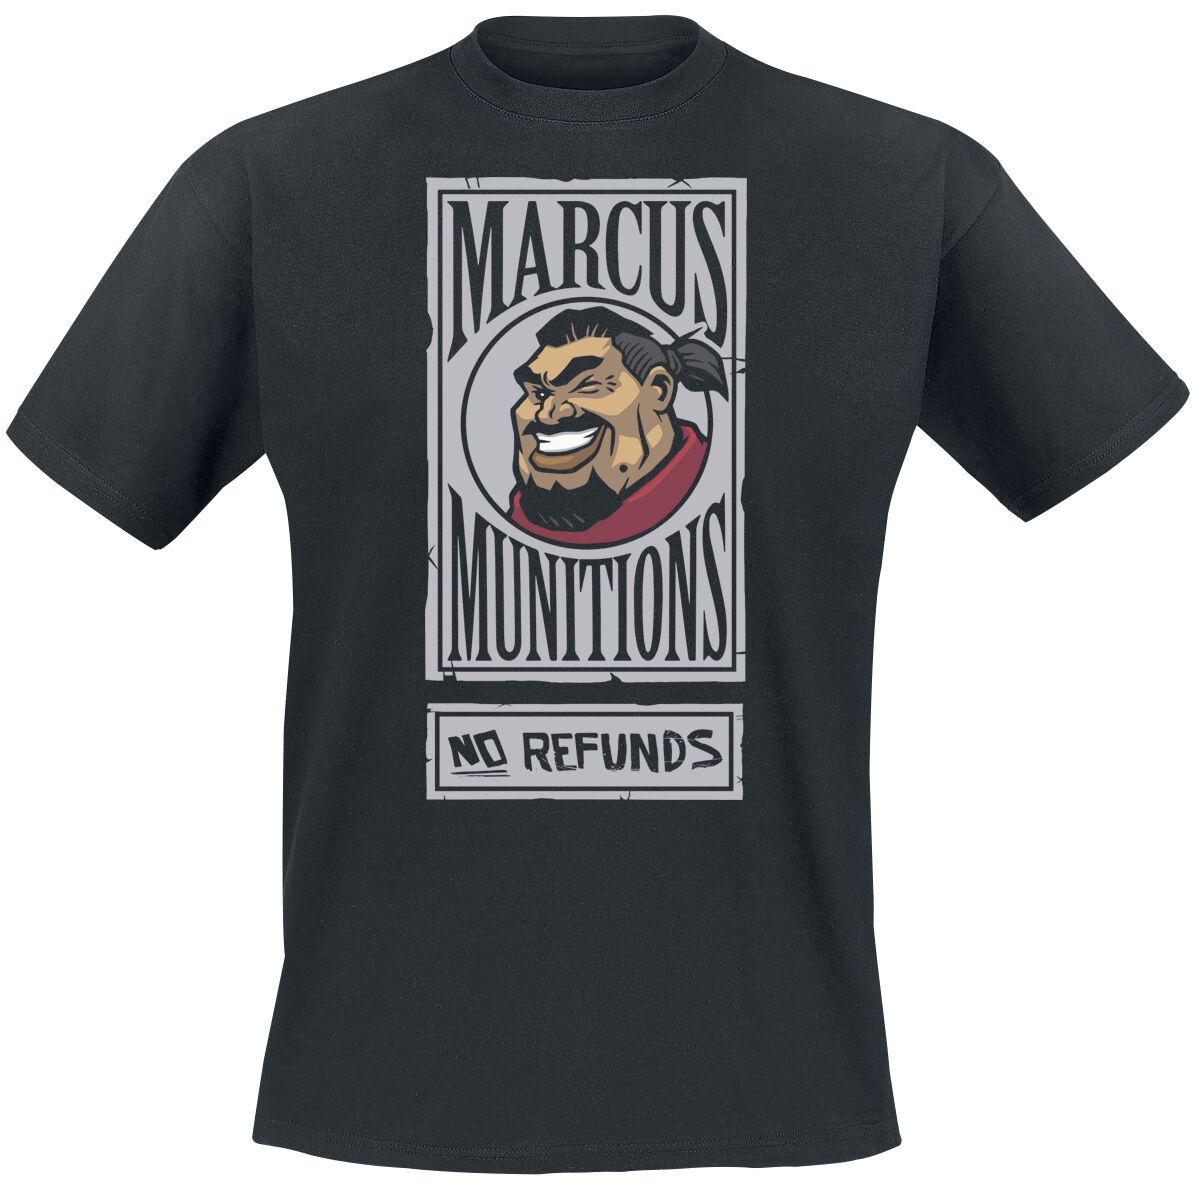 Borderlands 3 - Marcus Munitions T-Shirt schwarz in M